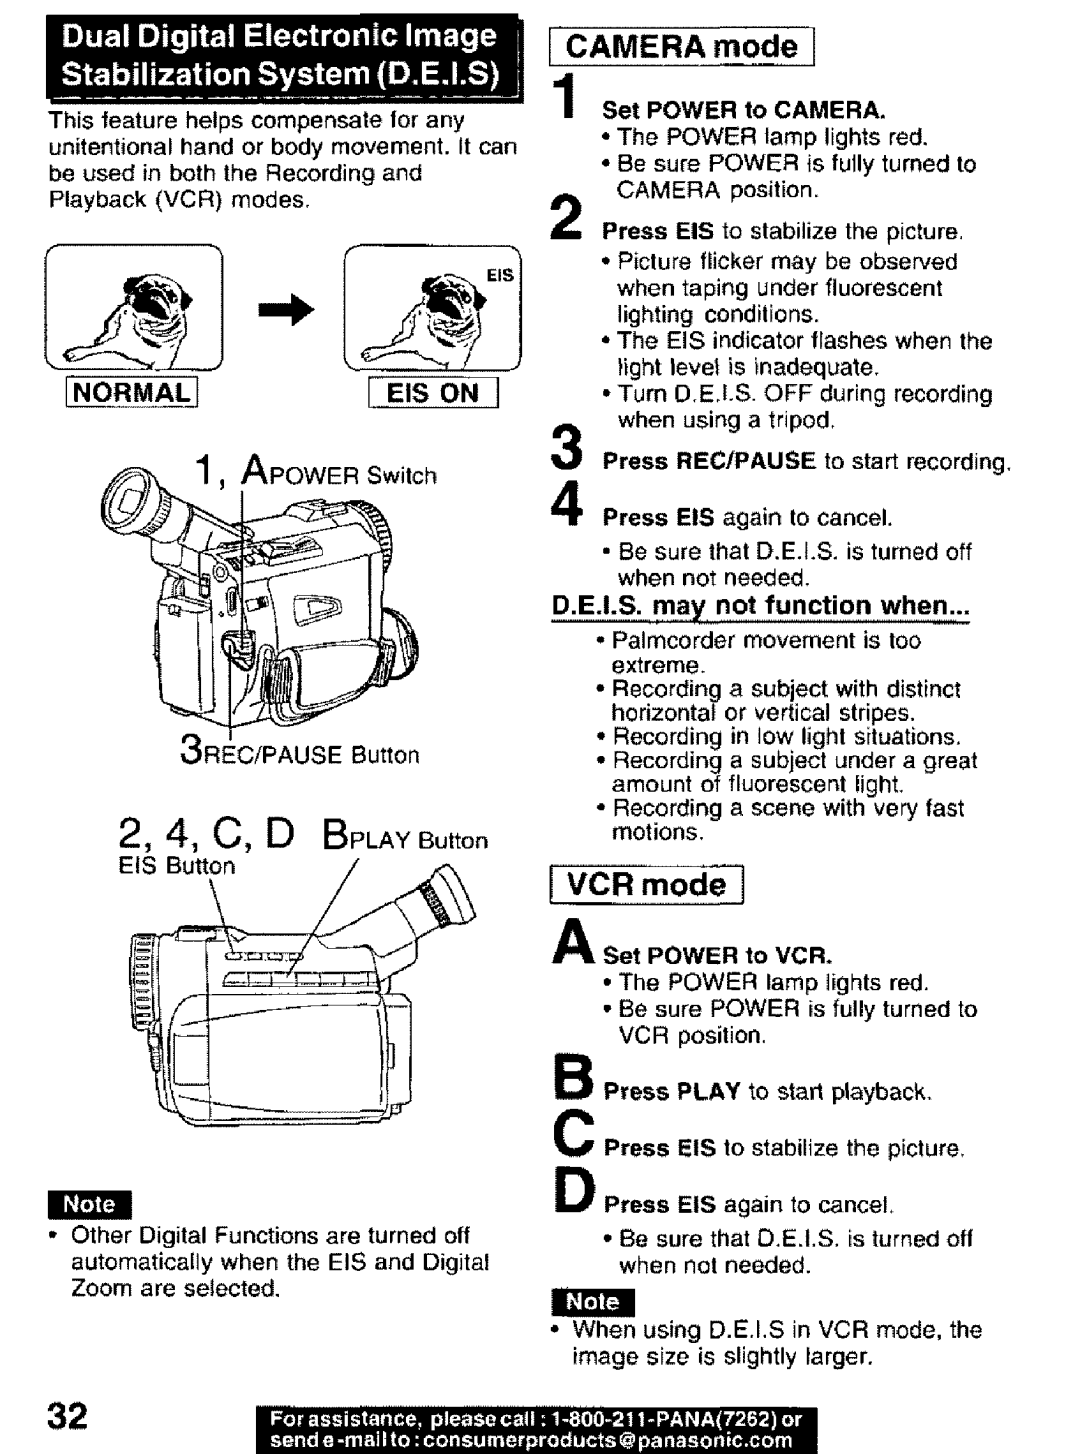 Panasonic PV-DV101 manual 1, APOWERSwitch, 2, 4, C, D BPLAYButton, CAMERA mode, VCR mode, Inormaljeison, 3RIC/PAUSE Button 